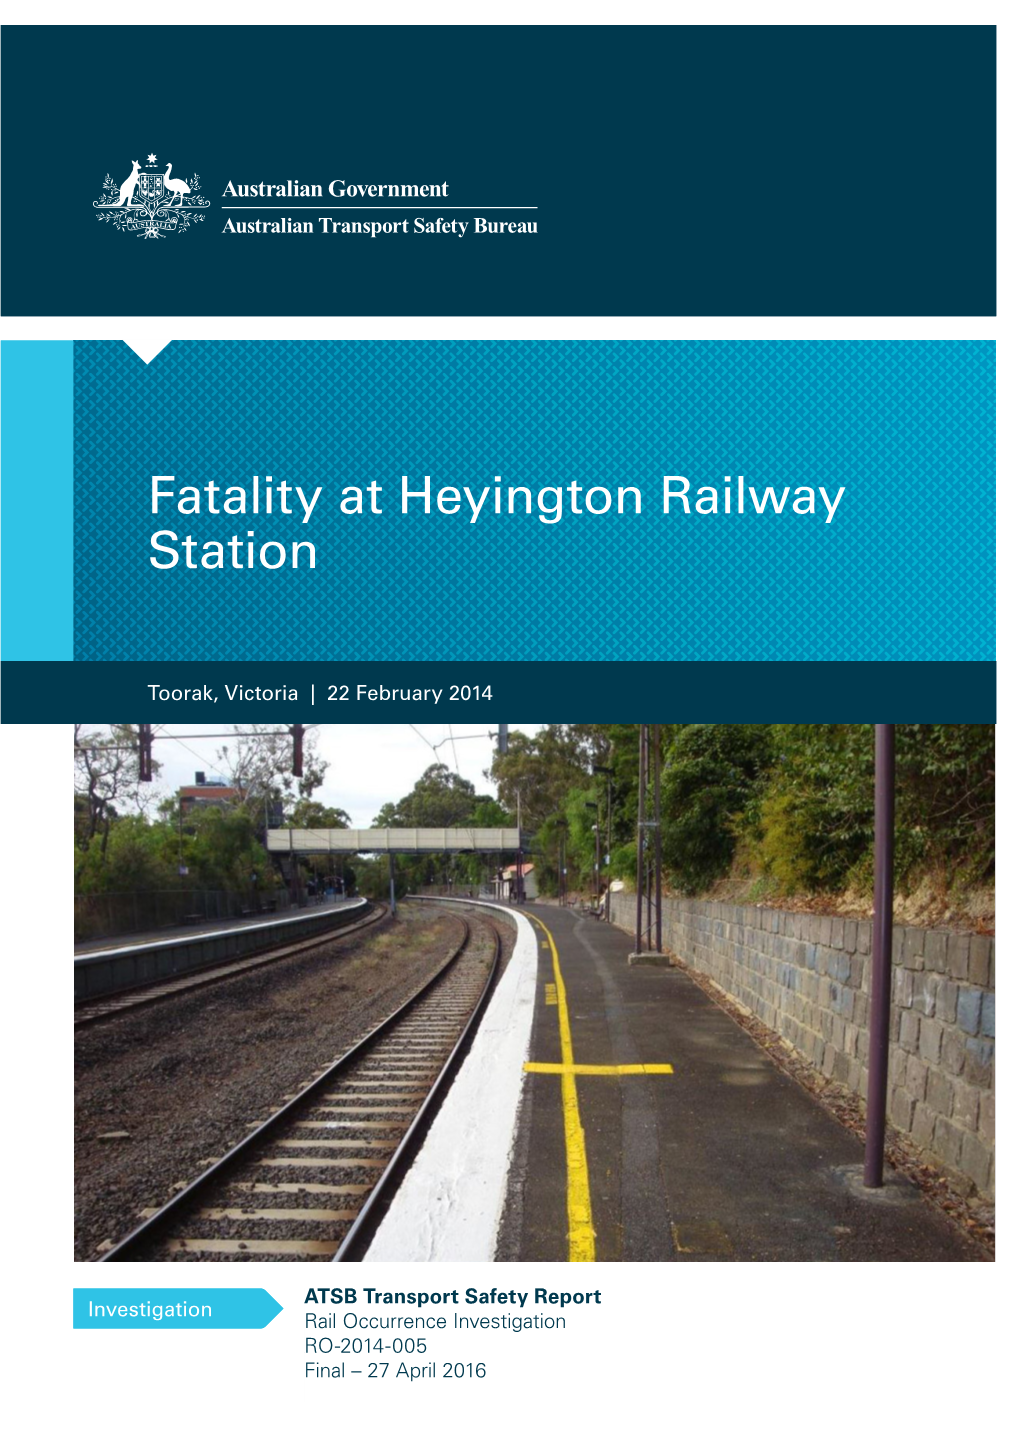 Fatality at Heyington Railway Station Toorak, Victoria, 22 February 2014